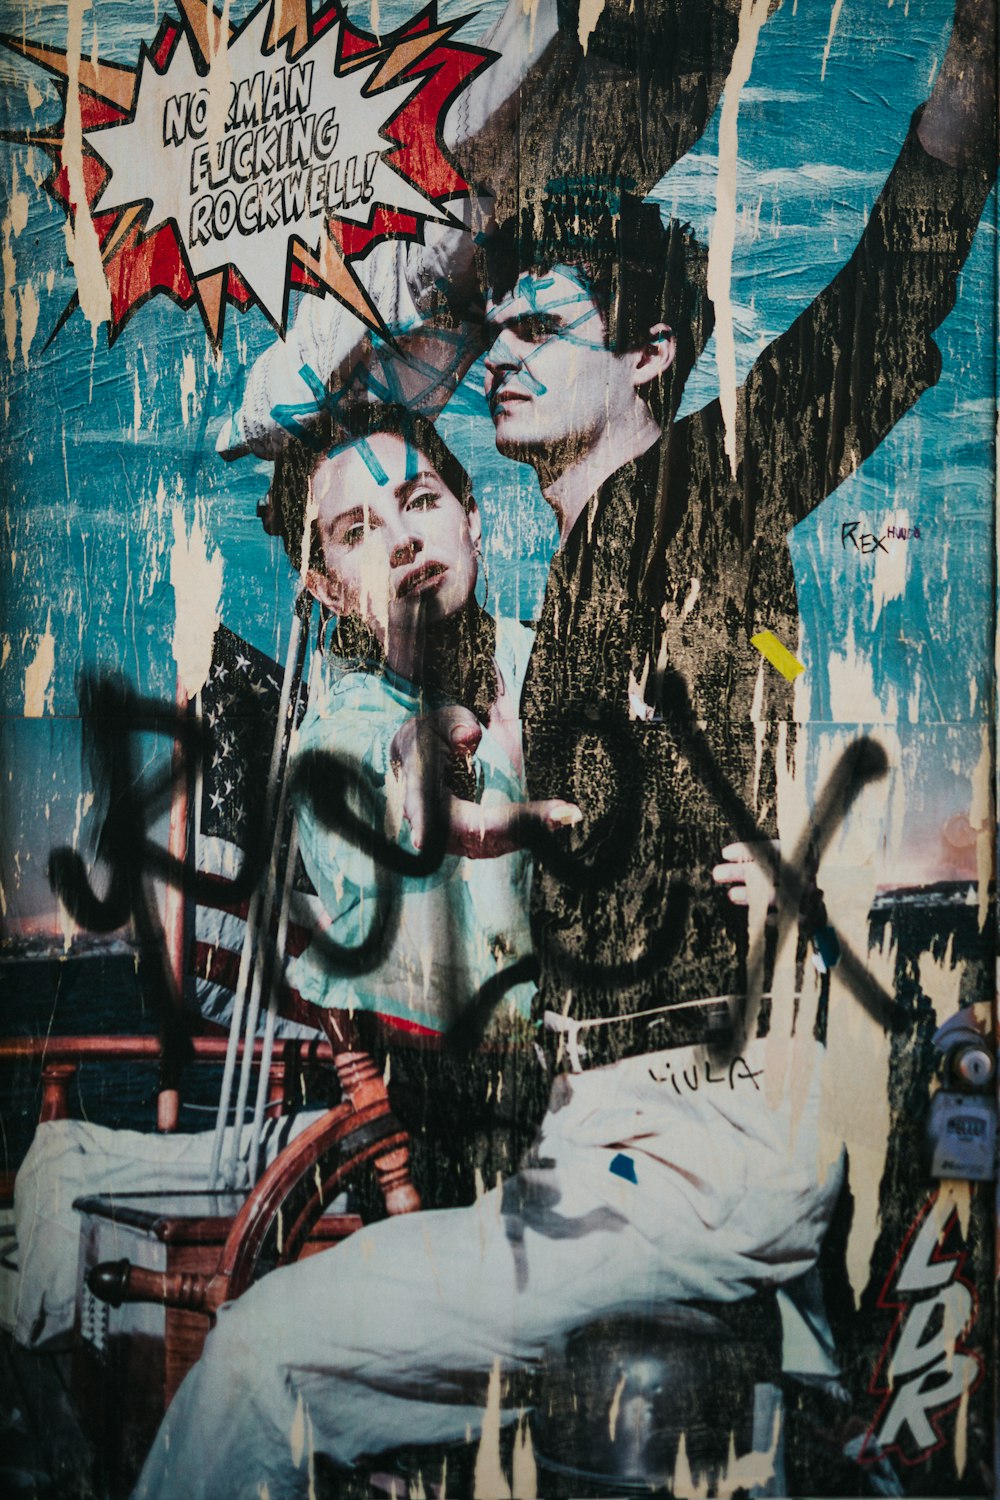 graffiti of two men